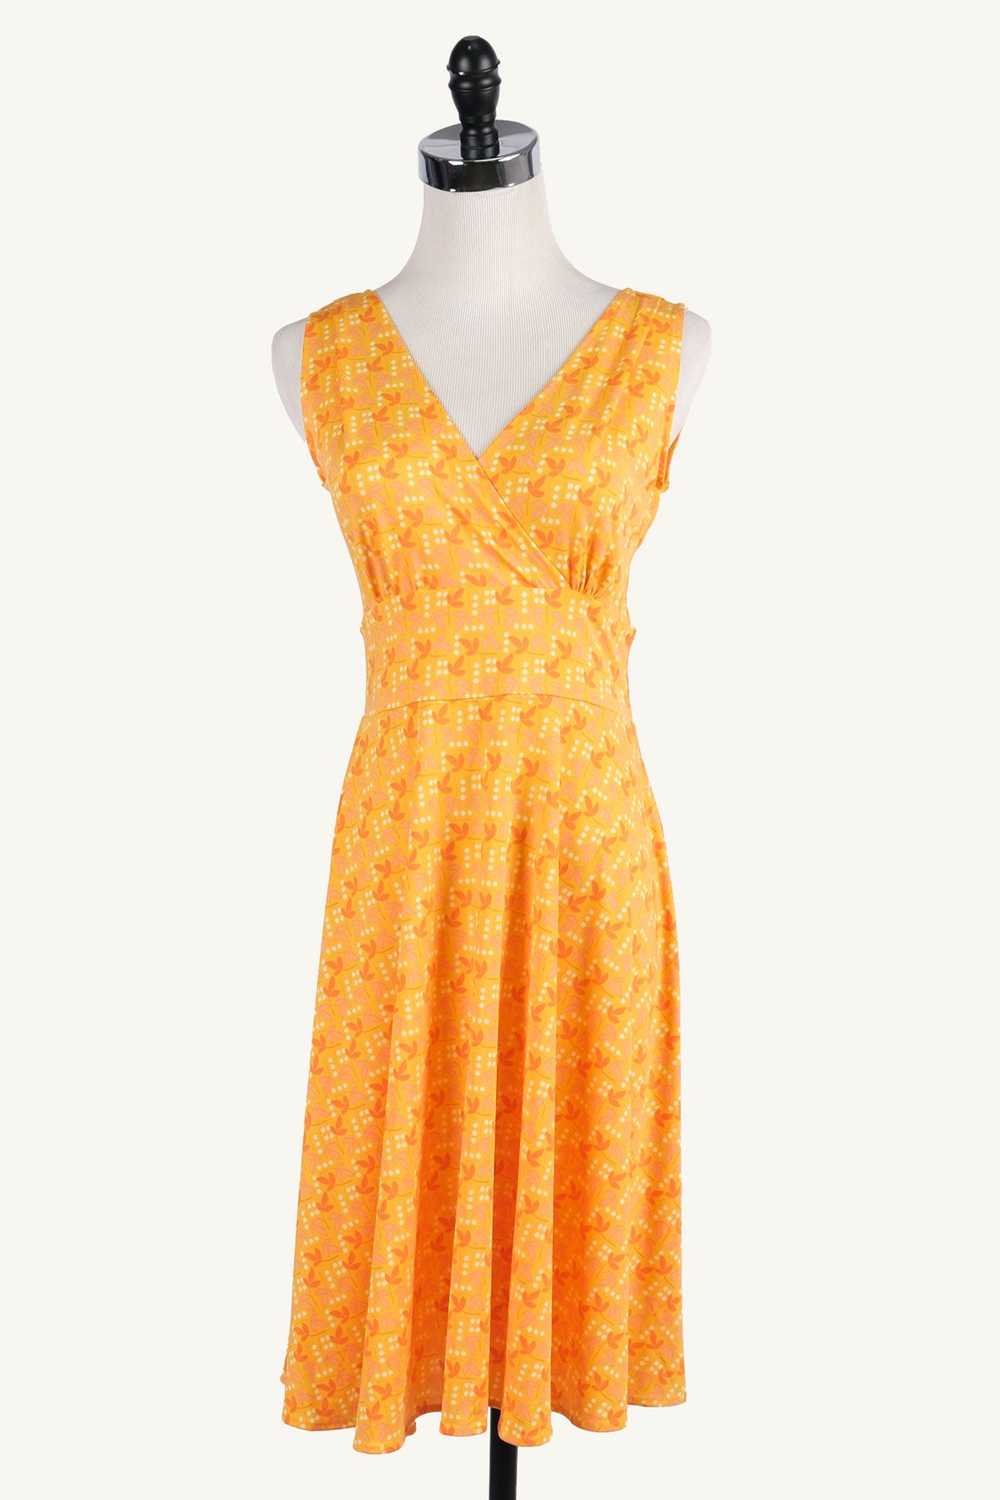 Karina Dresses Audrey Dress - Orange You Beautiful - image 10